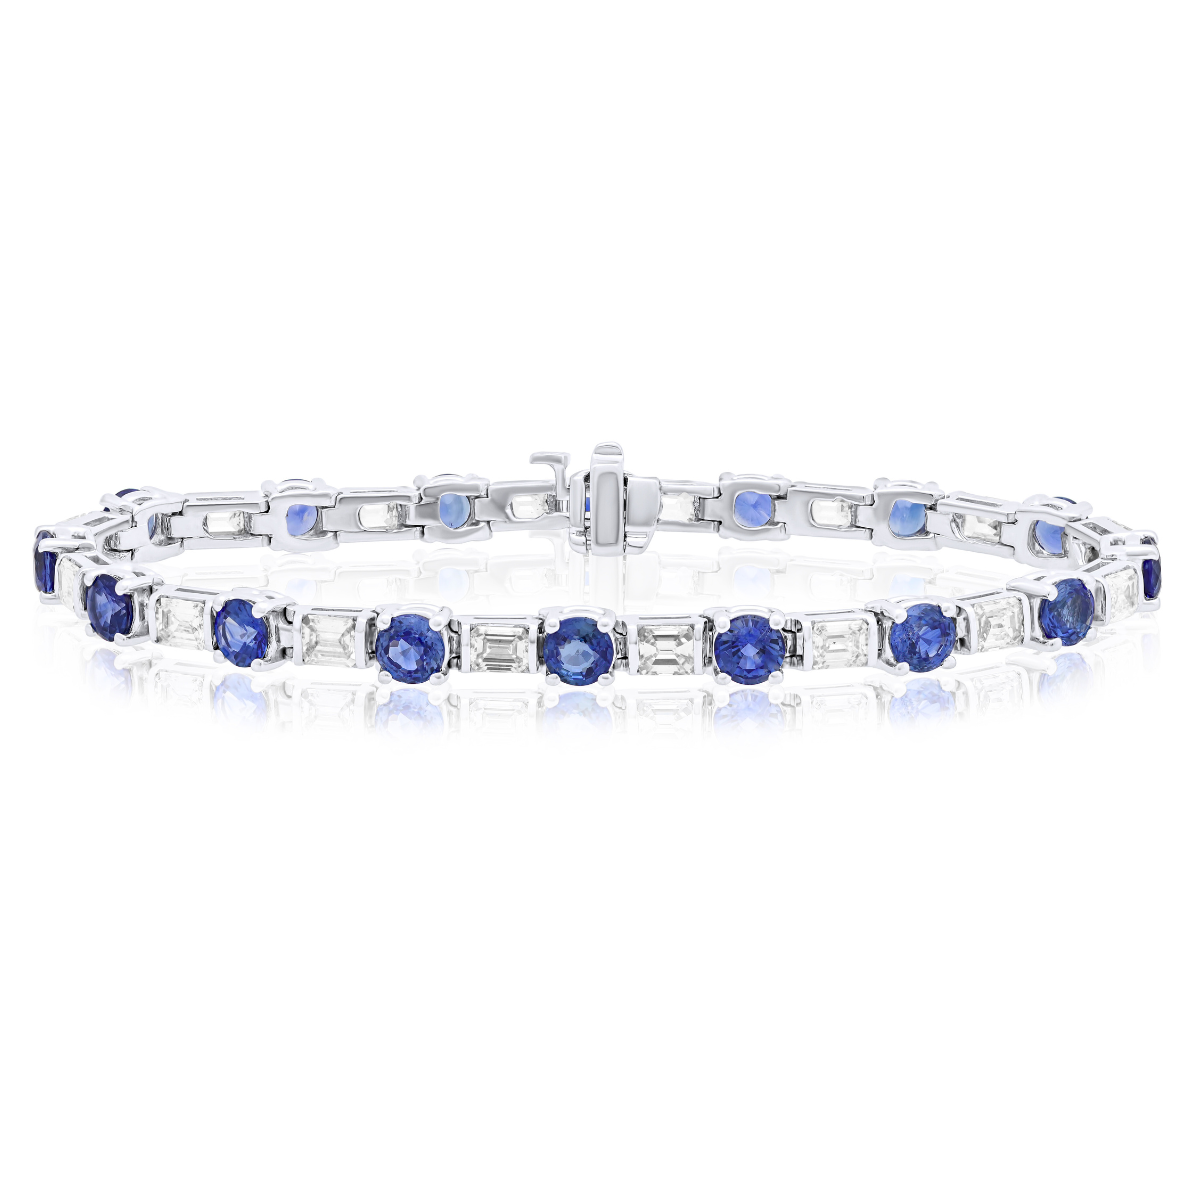 7.65cts Sapphire and Diamond Tennis Bracelet